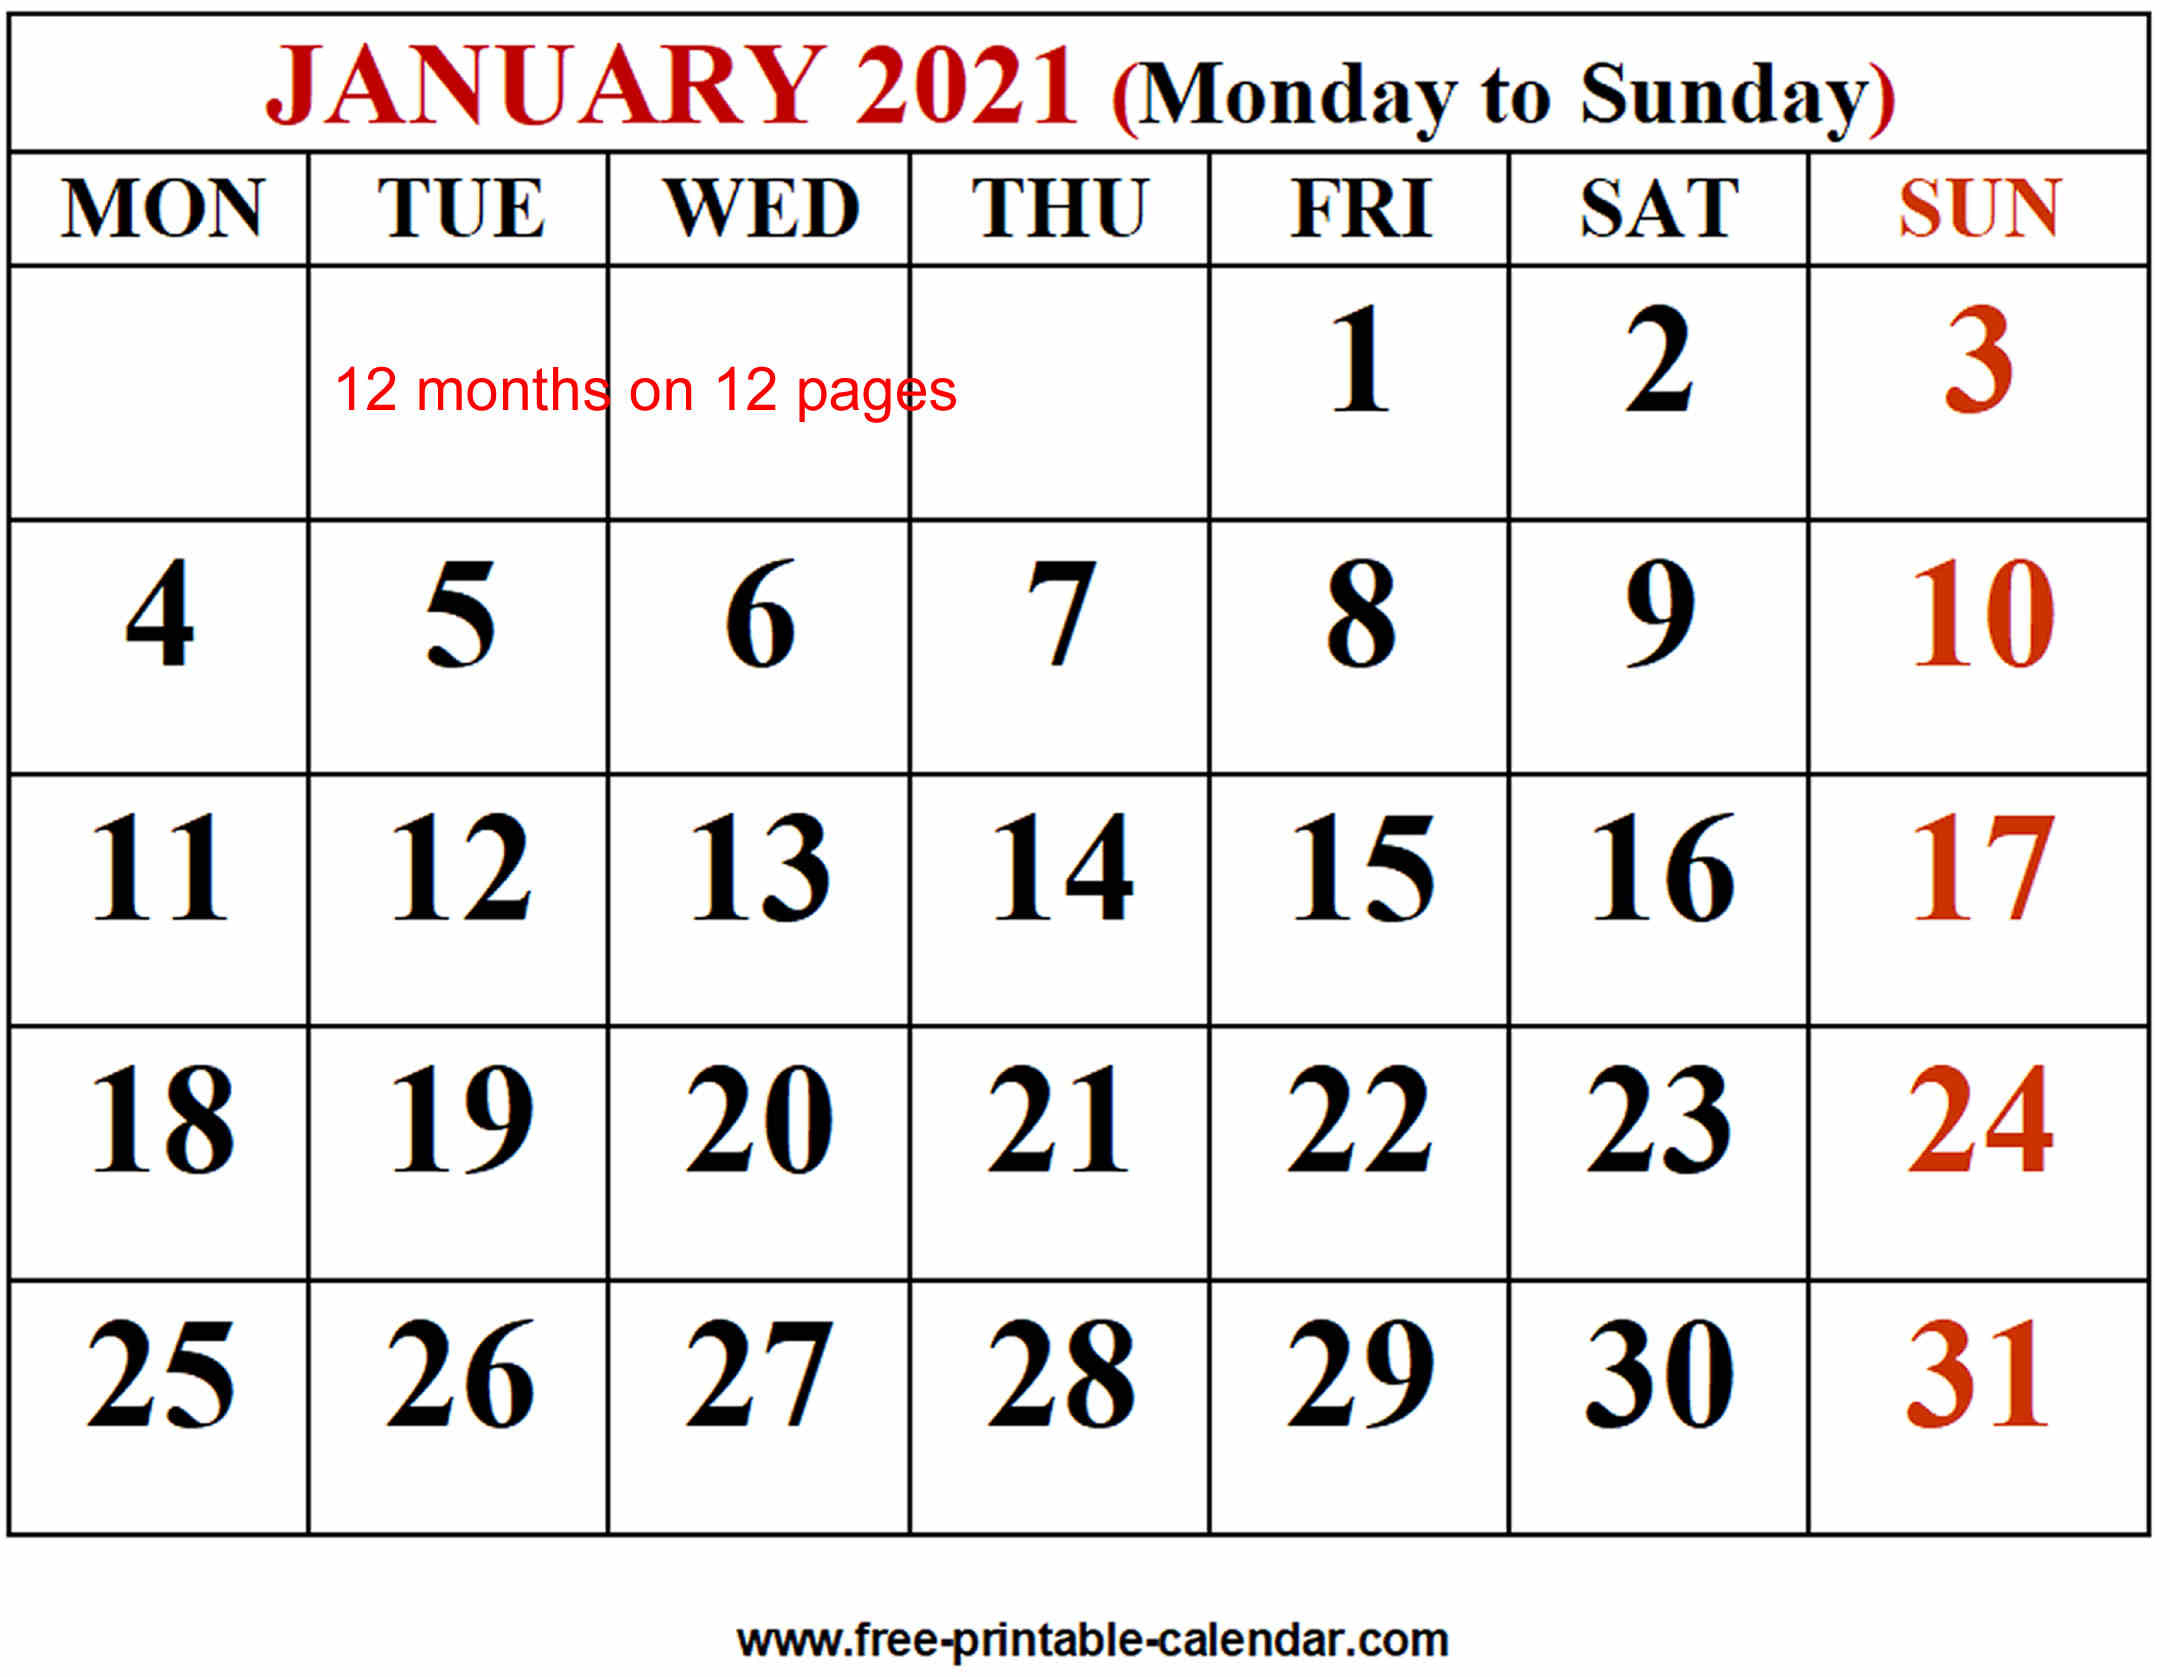 2021 Calendar Template - Free-Printable-Calendar